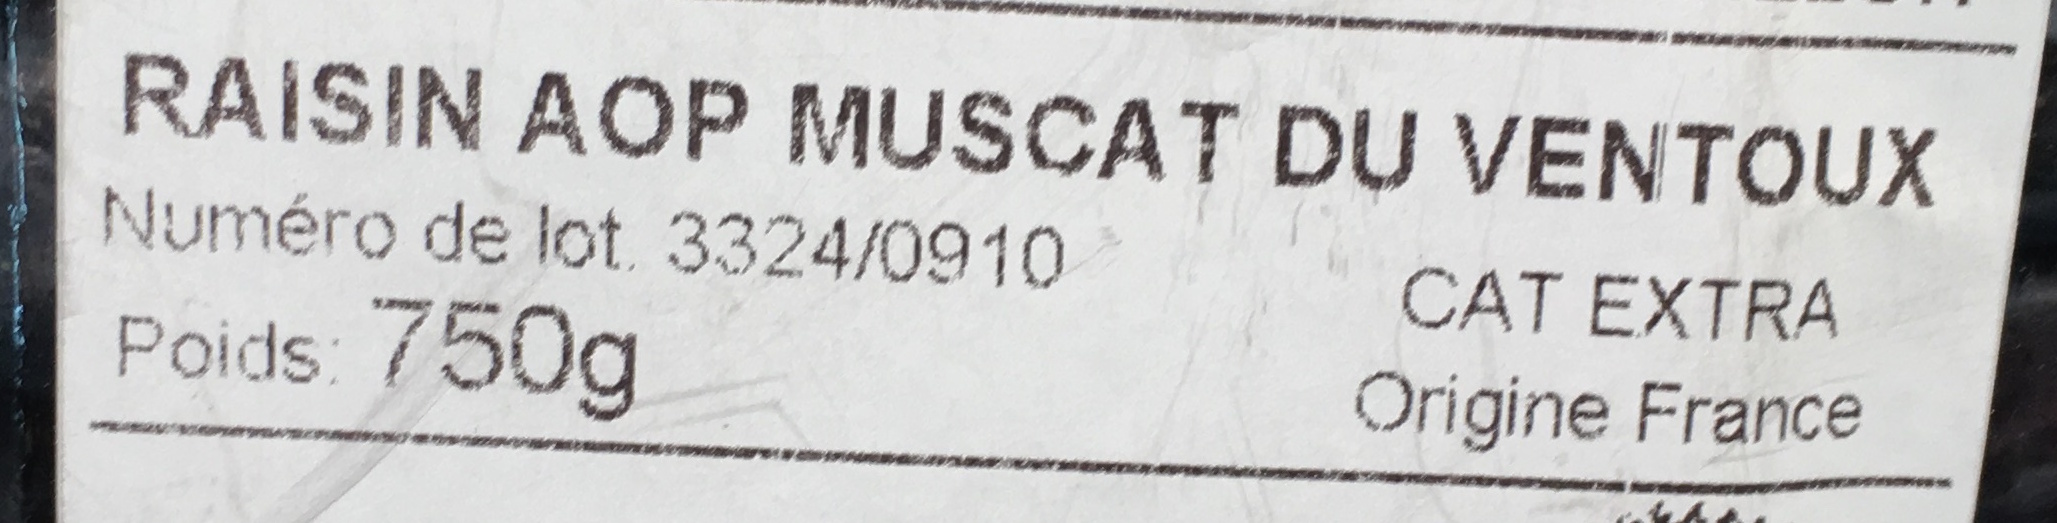 Muscat du Ventoux - Ingredienser - fr